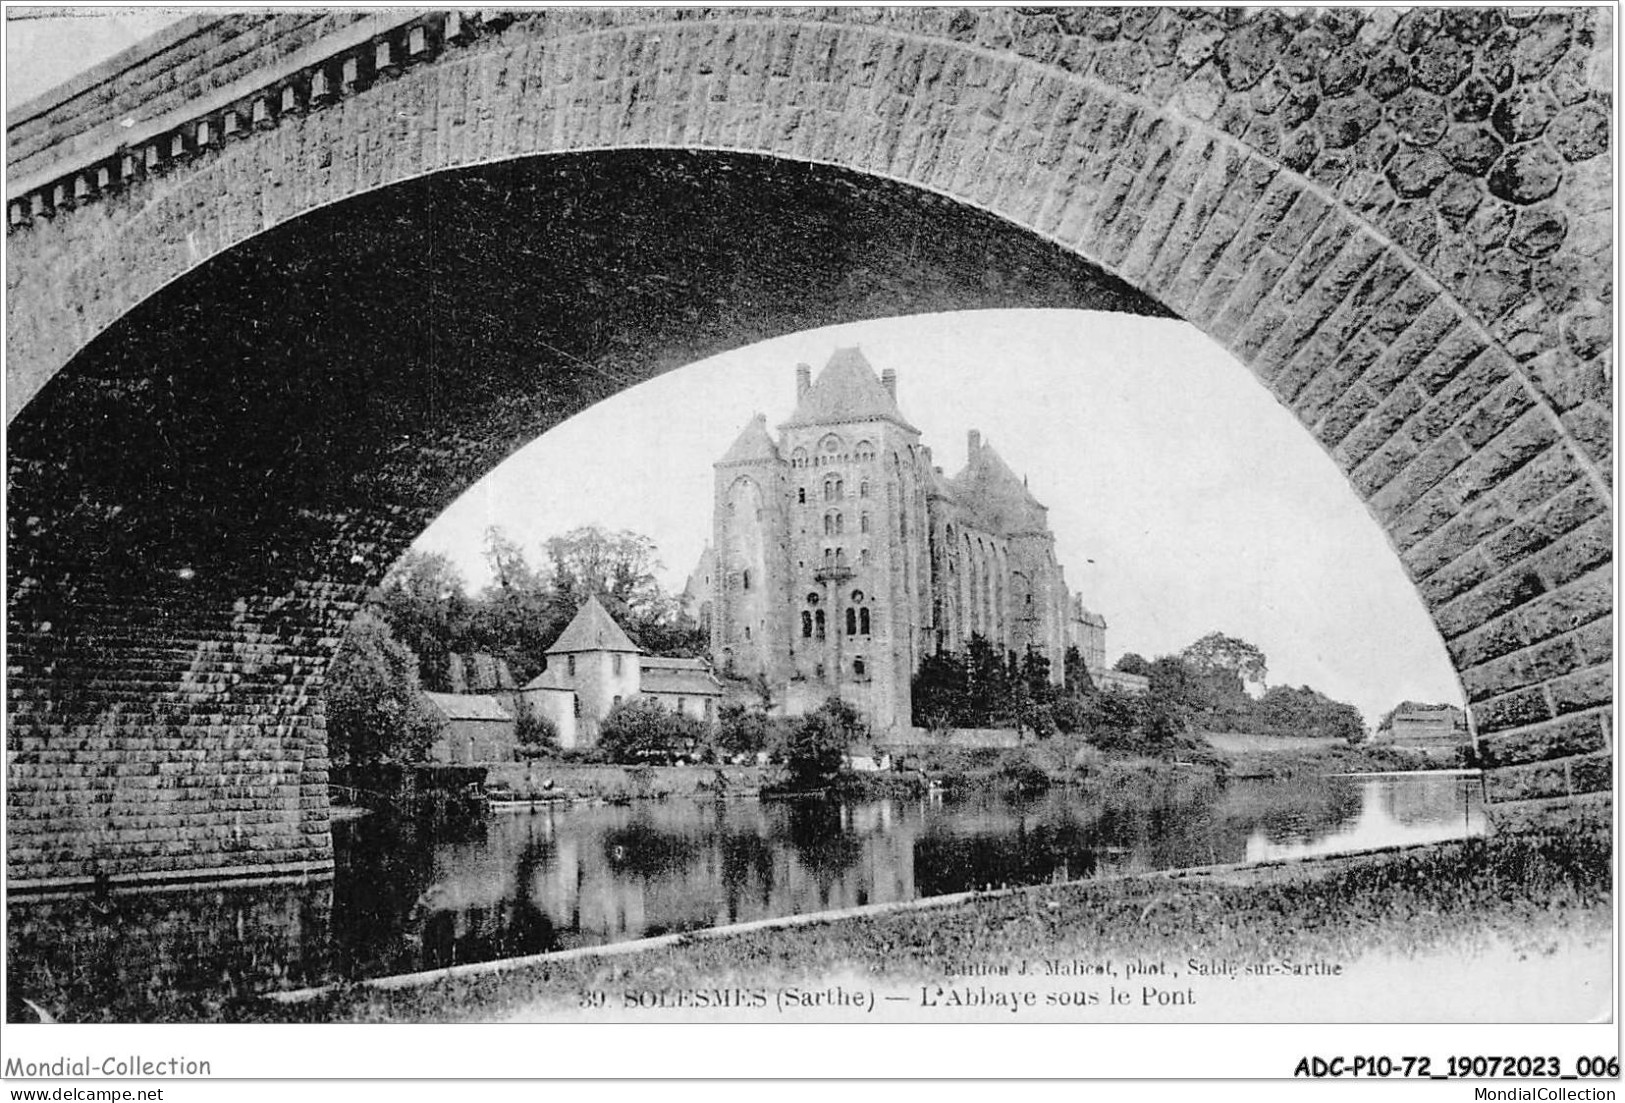 ADCP10-72-0907 - SOLESMES - L'abbaye Sous Le Pont  - Solesmes